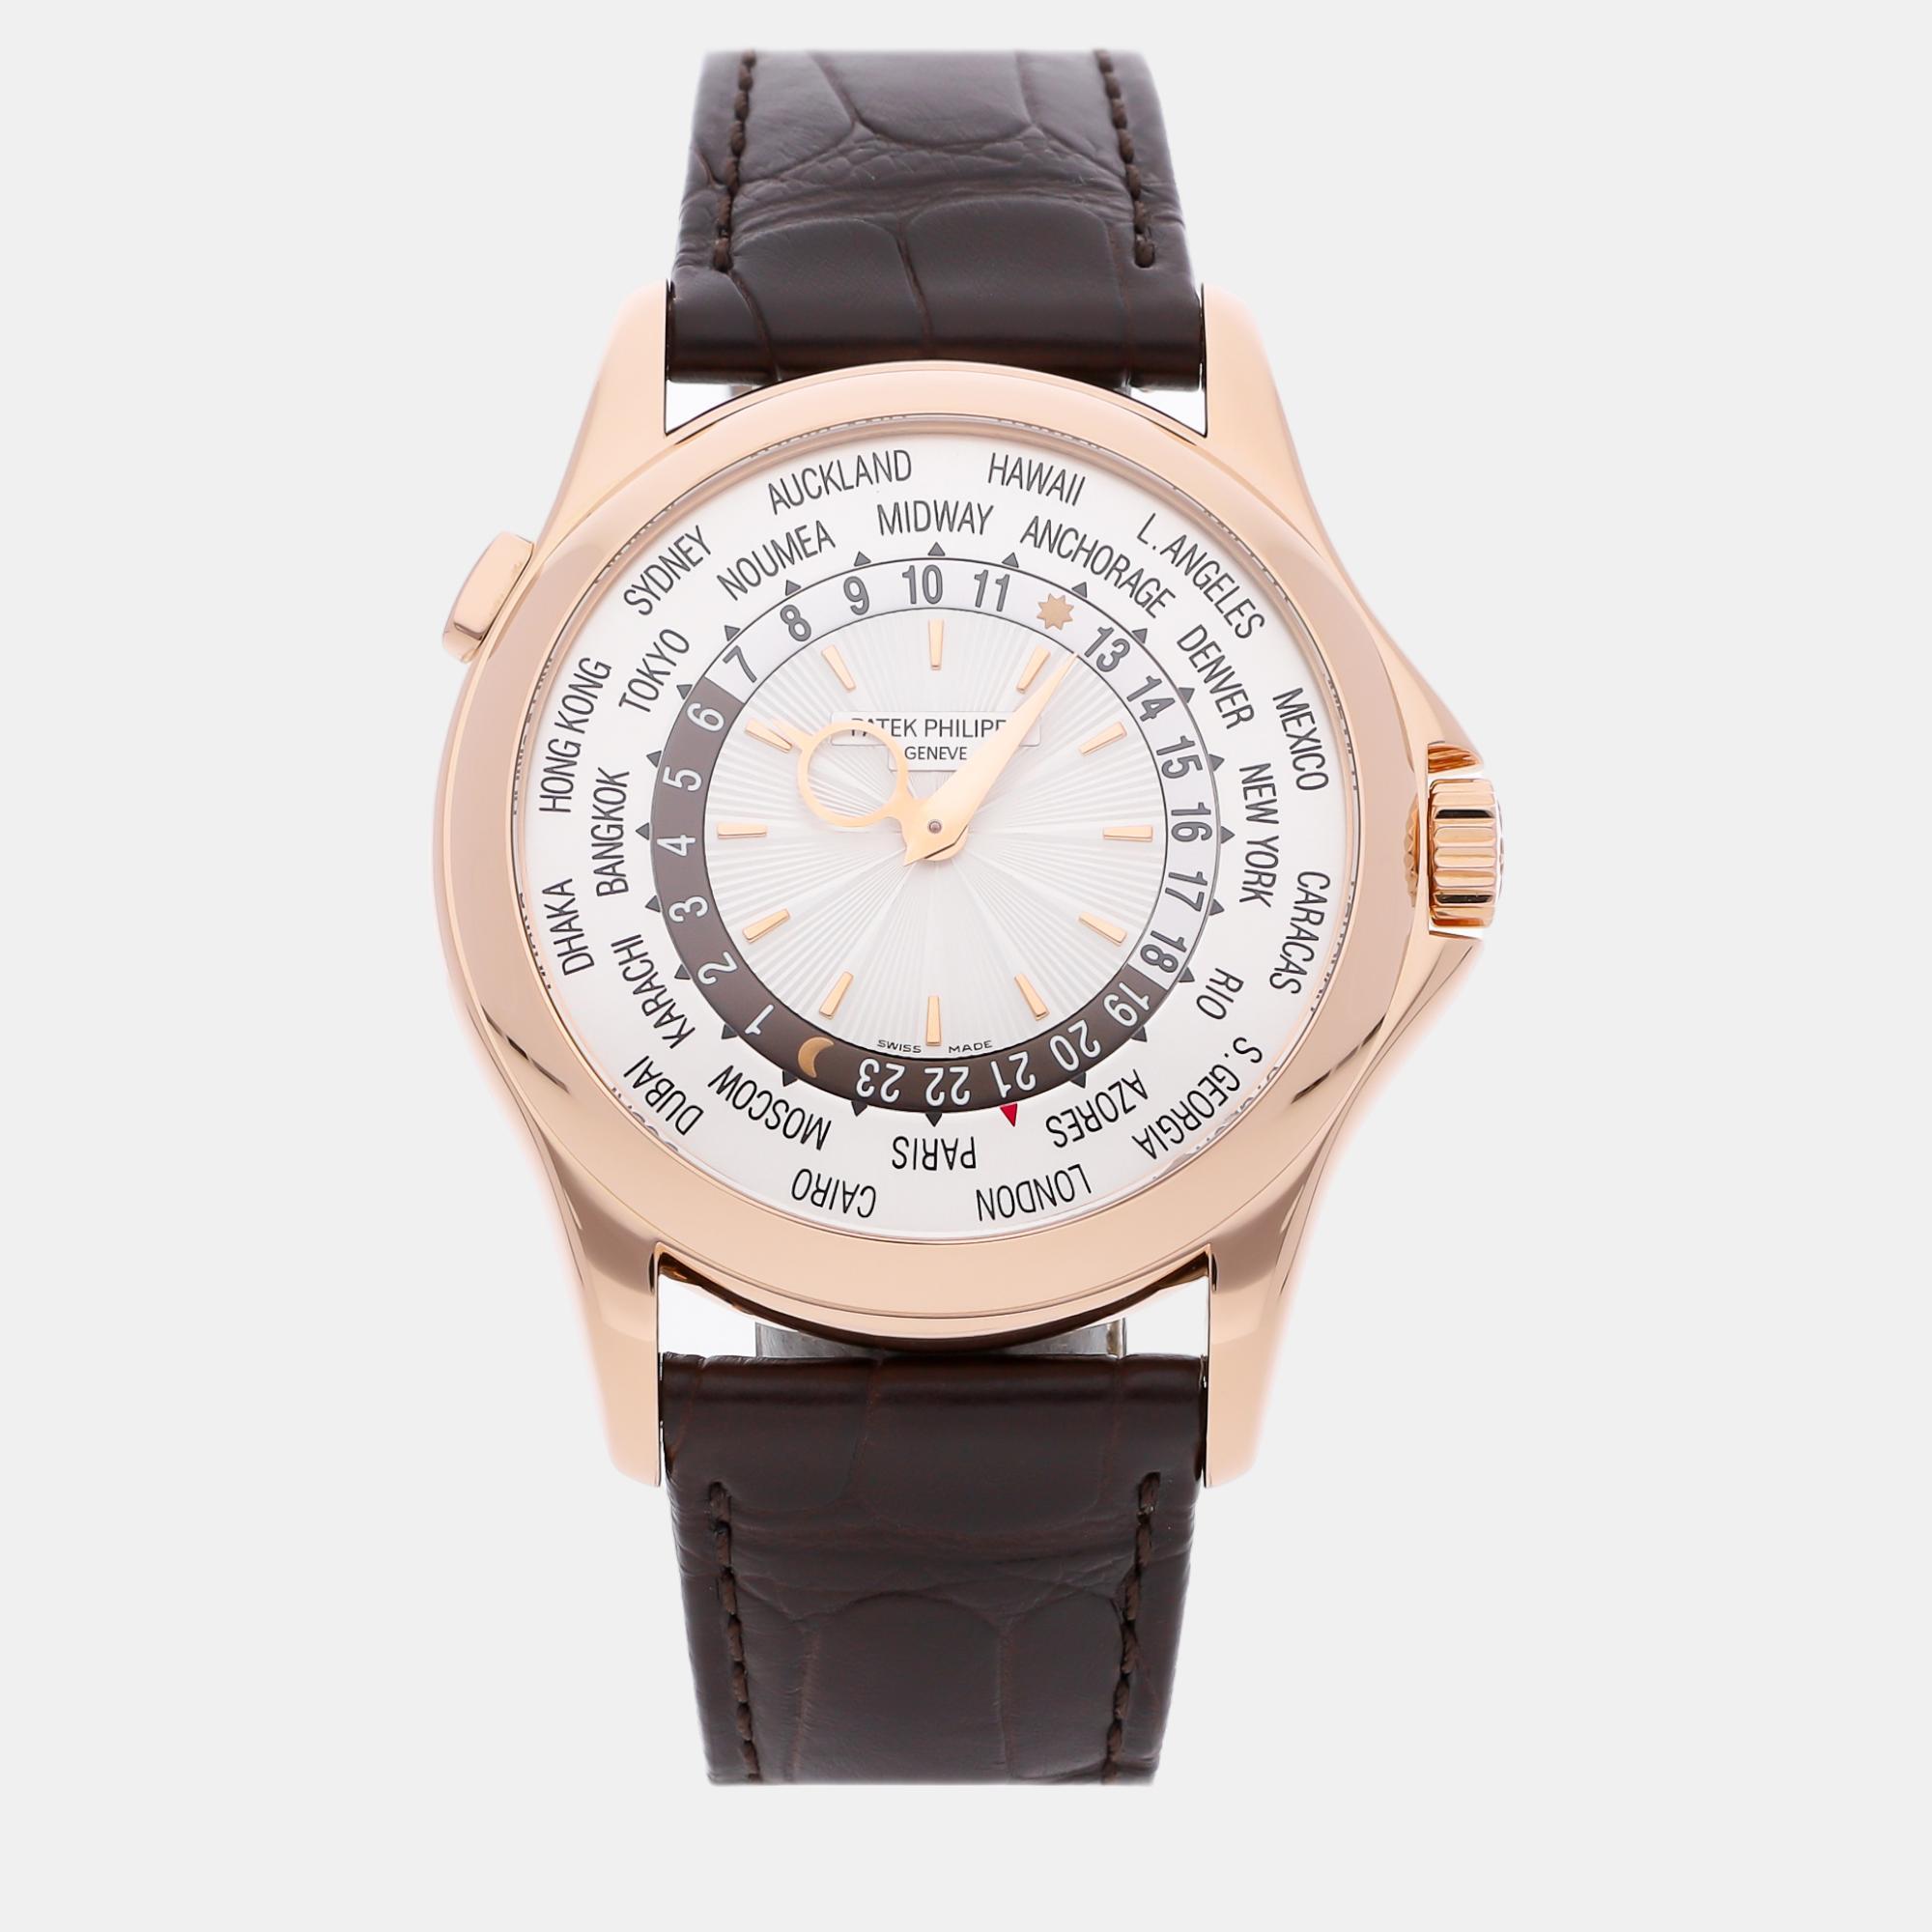 Patek philippe silver 18k rose gold complications 5130r-001 automatic men's wristwatch 39 mm